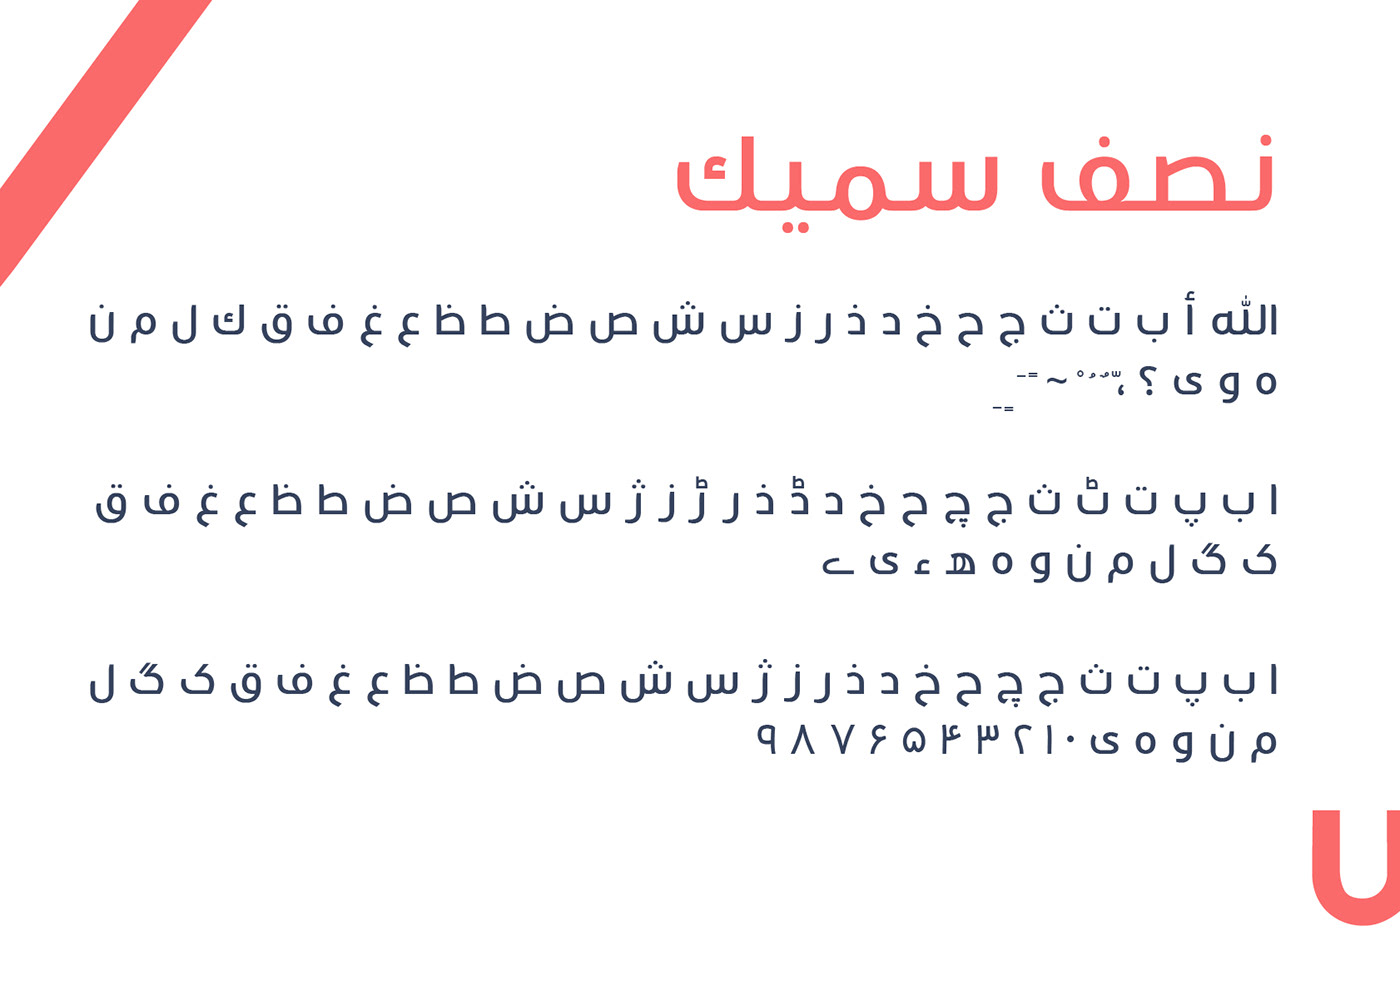 ALREFAIY arabic font Arabic Fonts Arabic Script Arabic Typeface font tyepface কভার ডিজাইন خط يدوي  حصاد العام